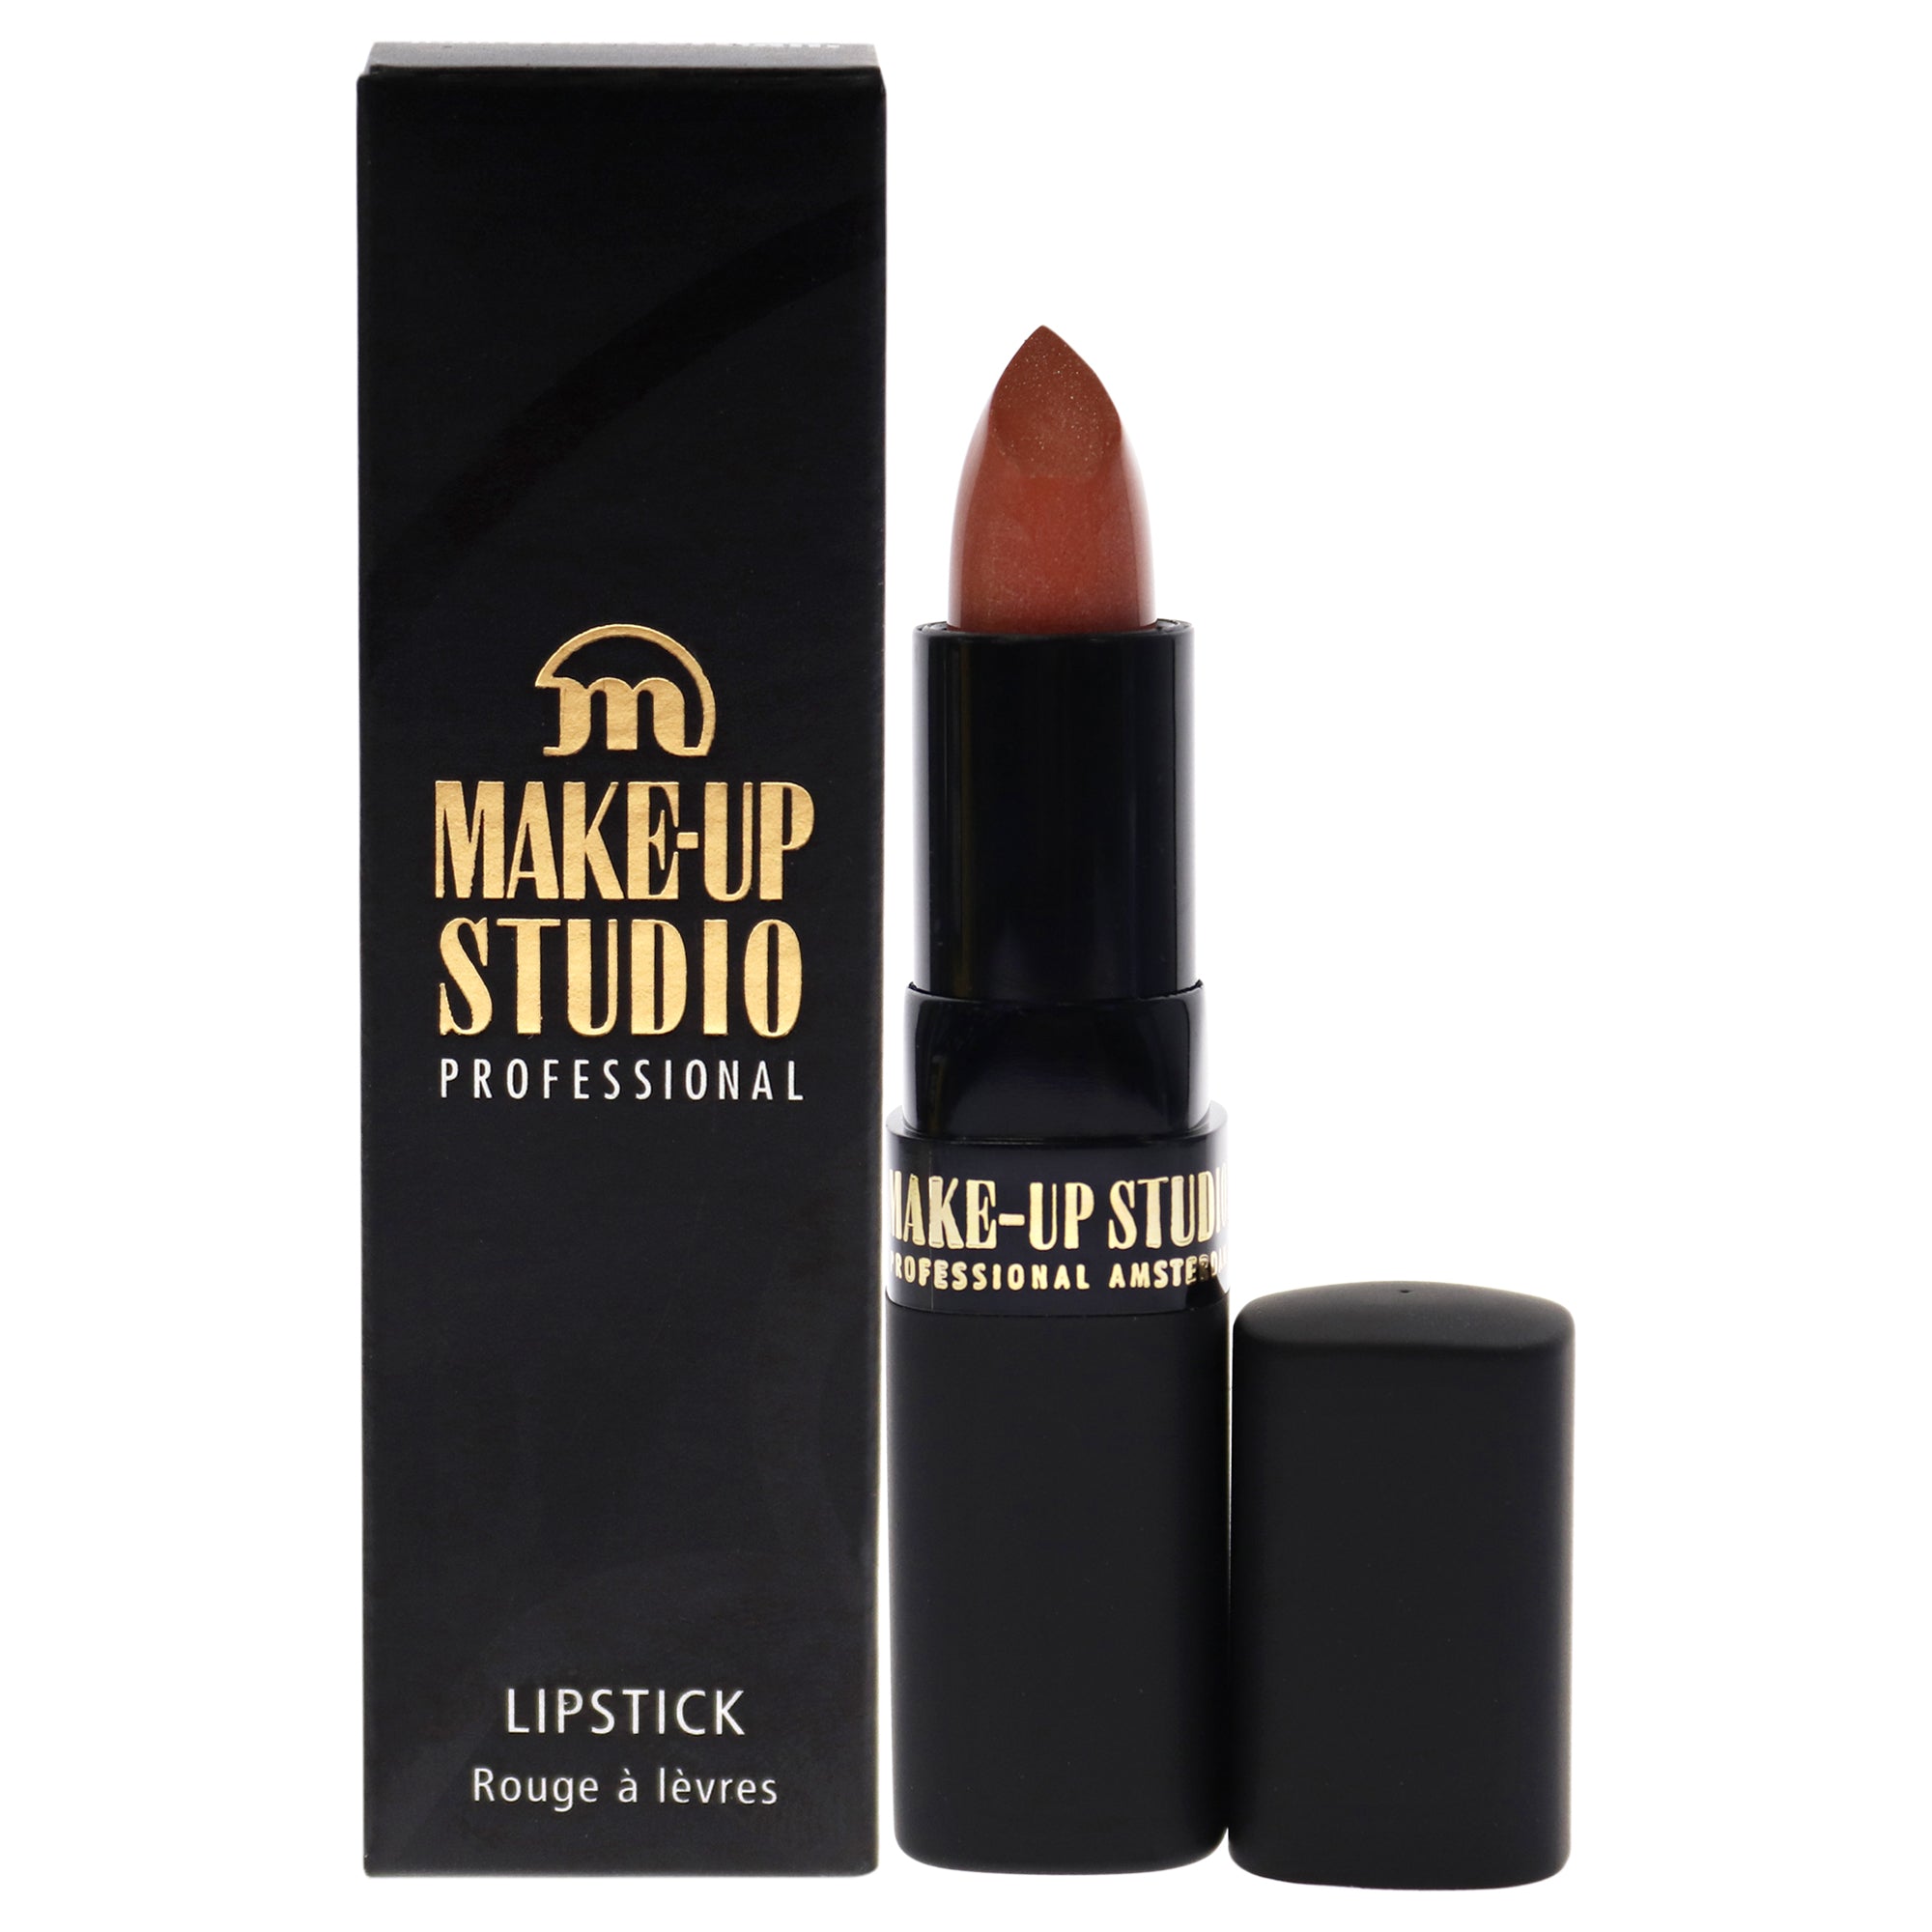 Lipstick - 51 by Make-Up Studio for Women - 0.13 oz Lipstick